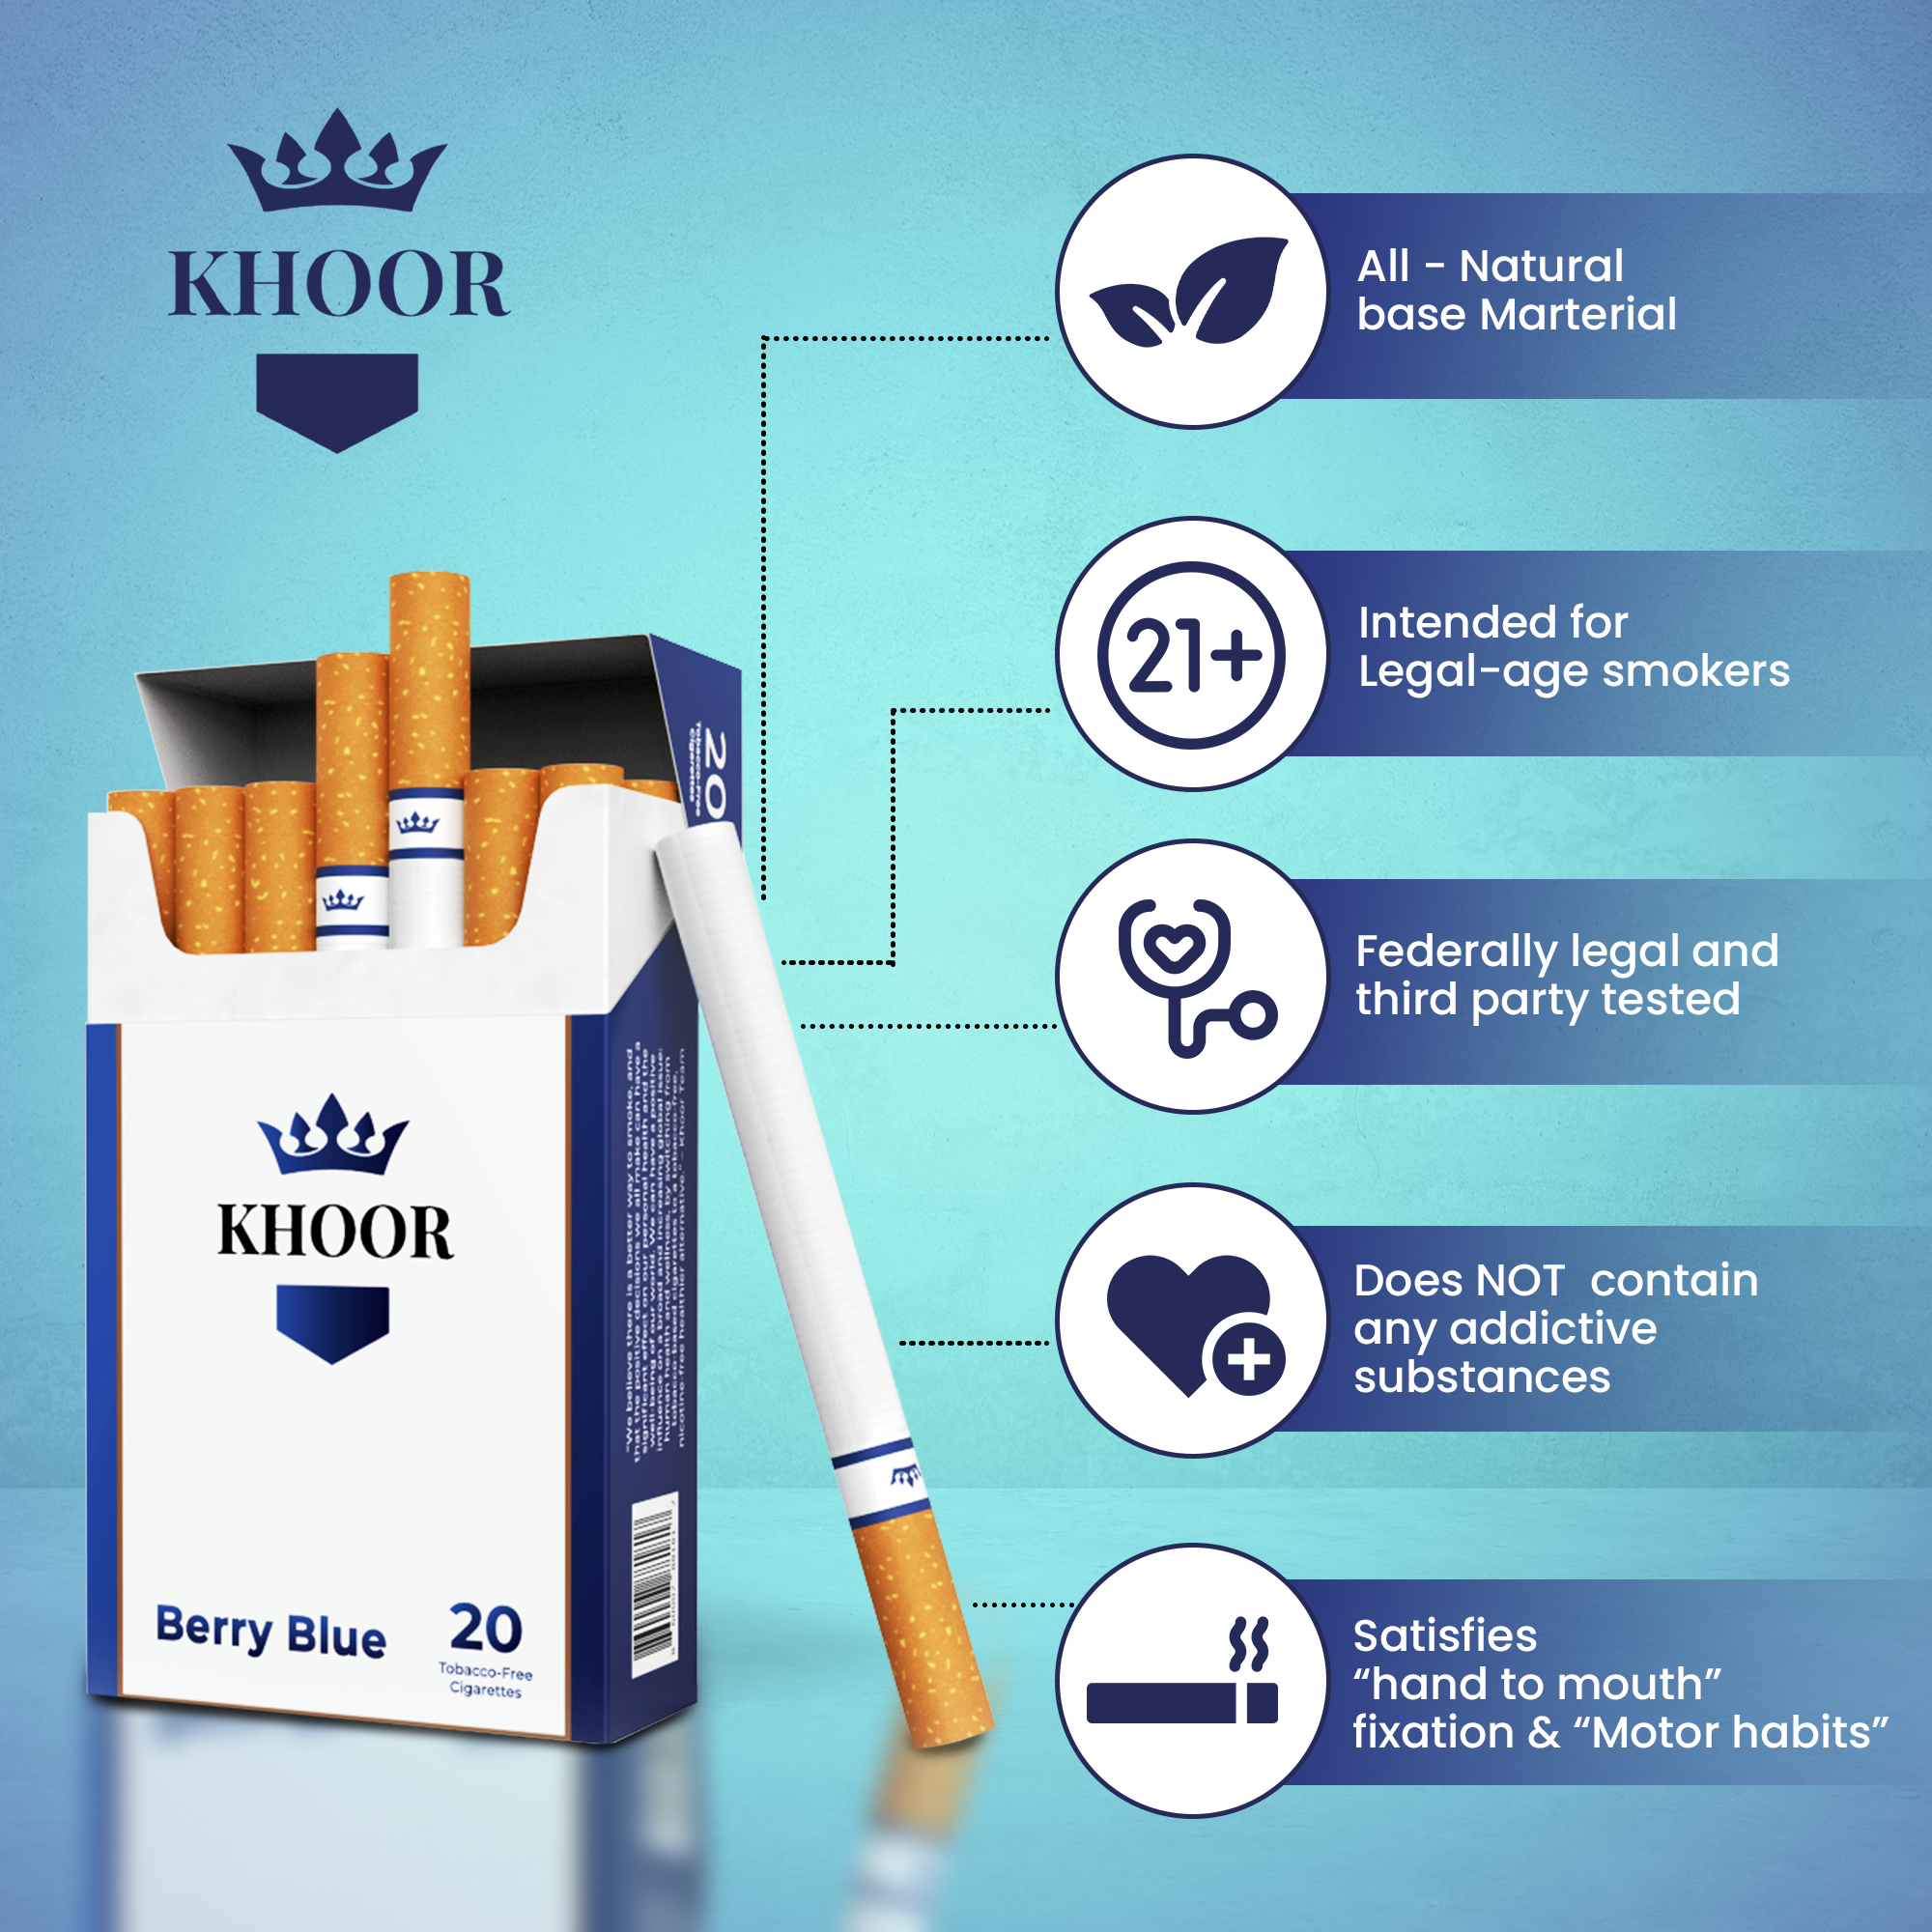 Experience the Rich Flavor of Marlboro Blue Cigarettes